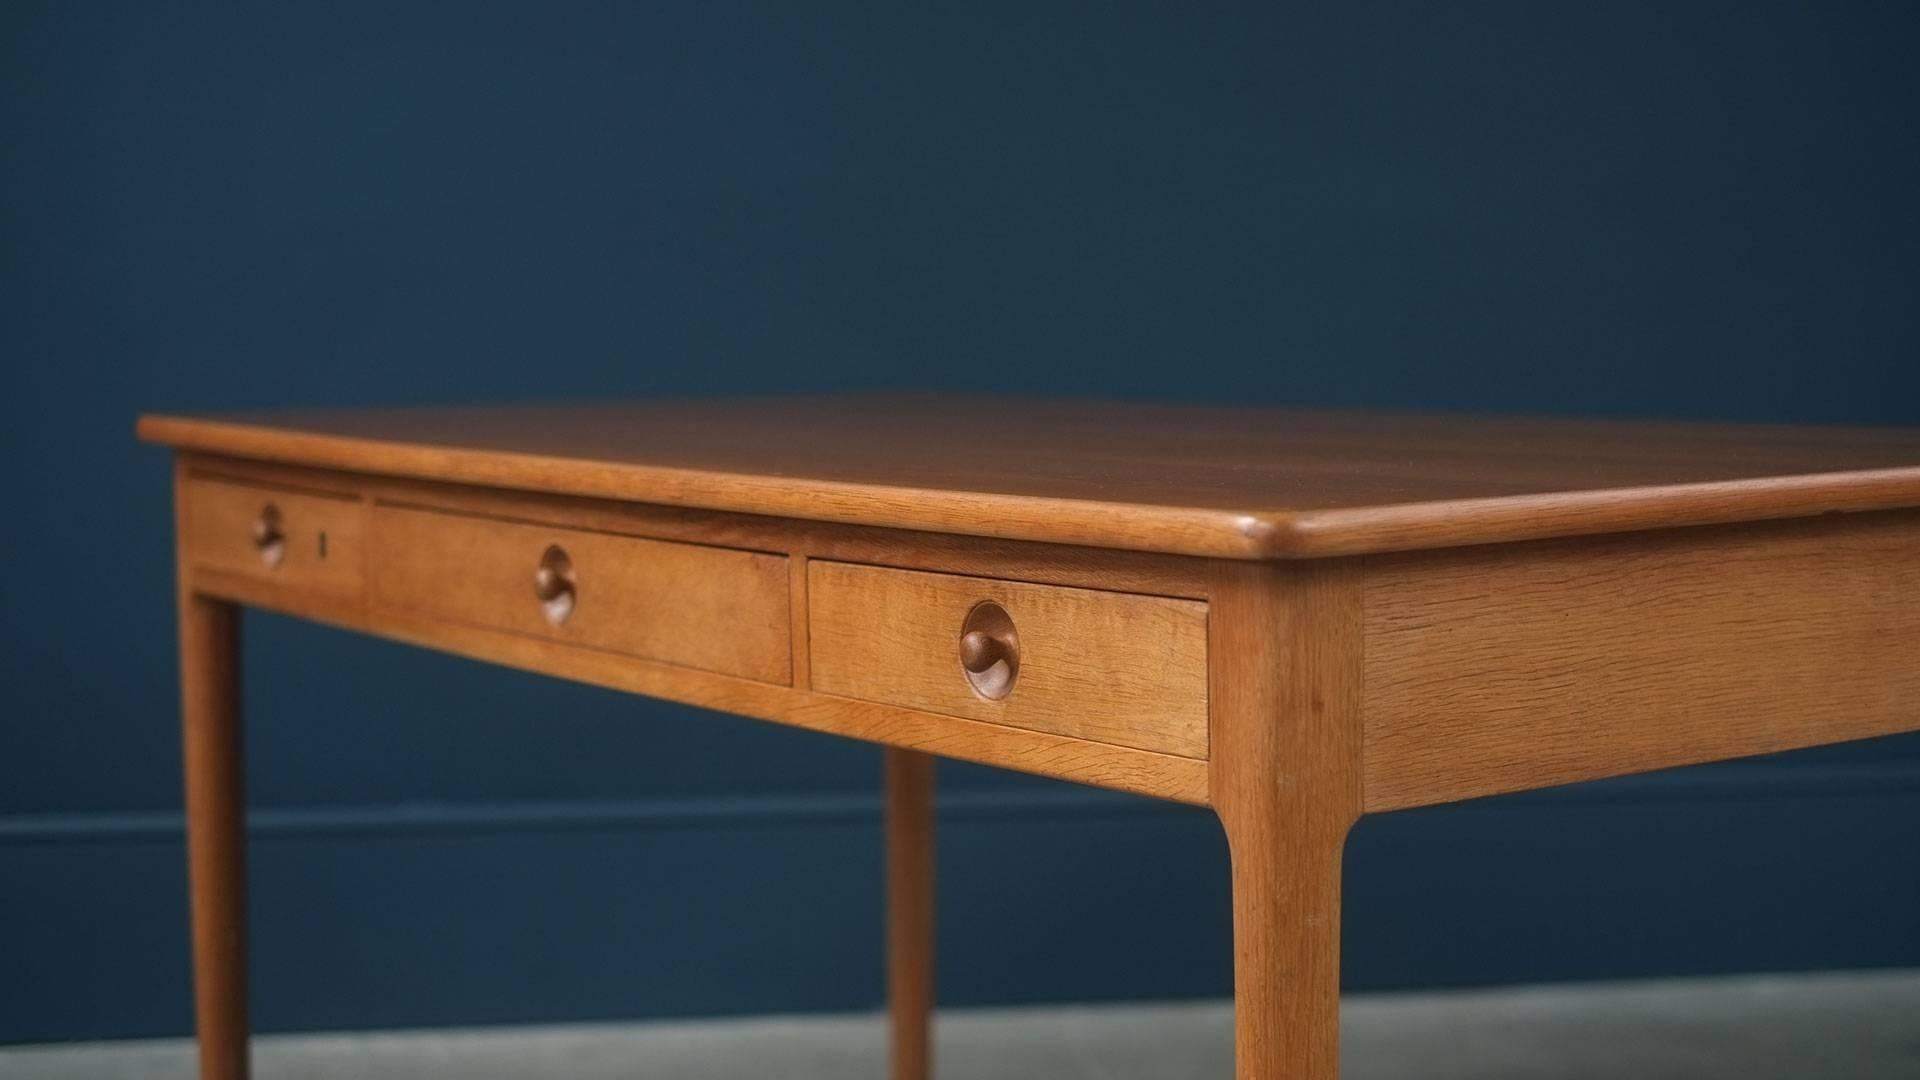 Fantastic desk in oak designed by Hans Wegner for Andreas Tuck, Denmark. Classic and elegant piece with wonderful details.